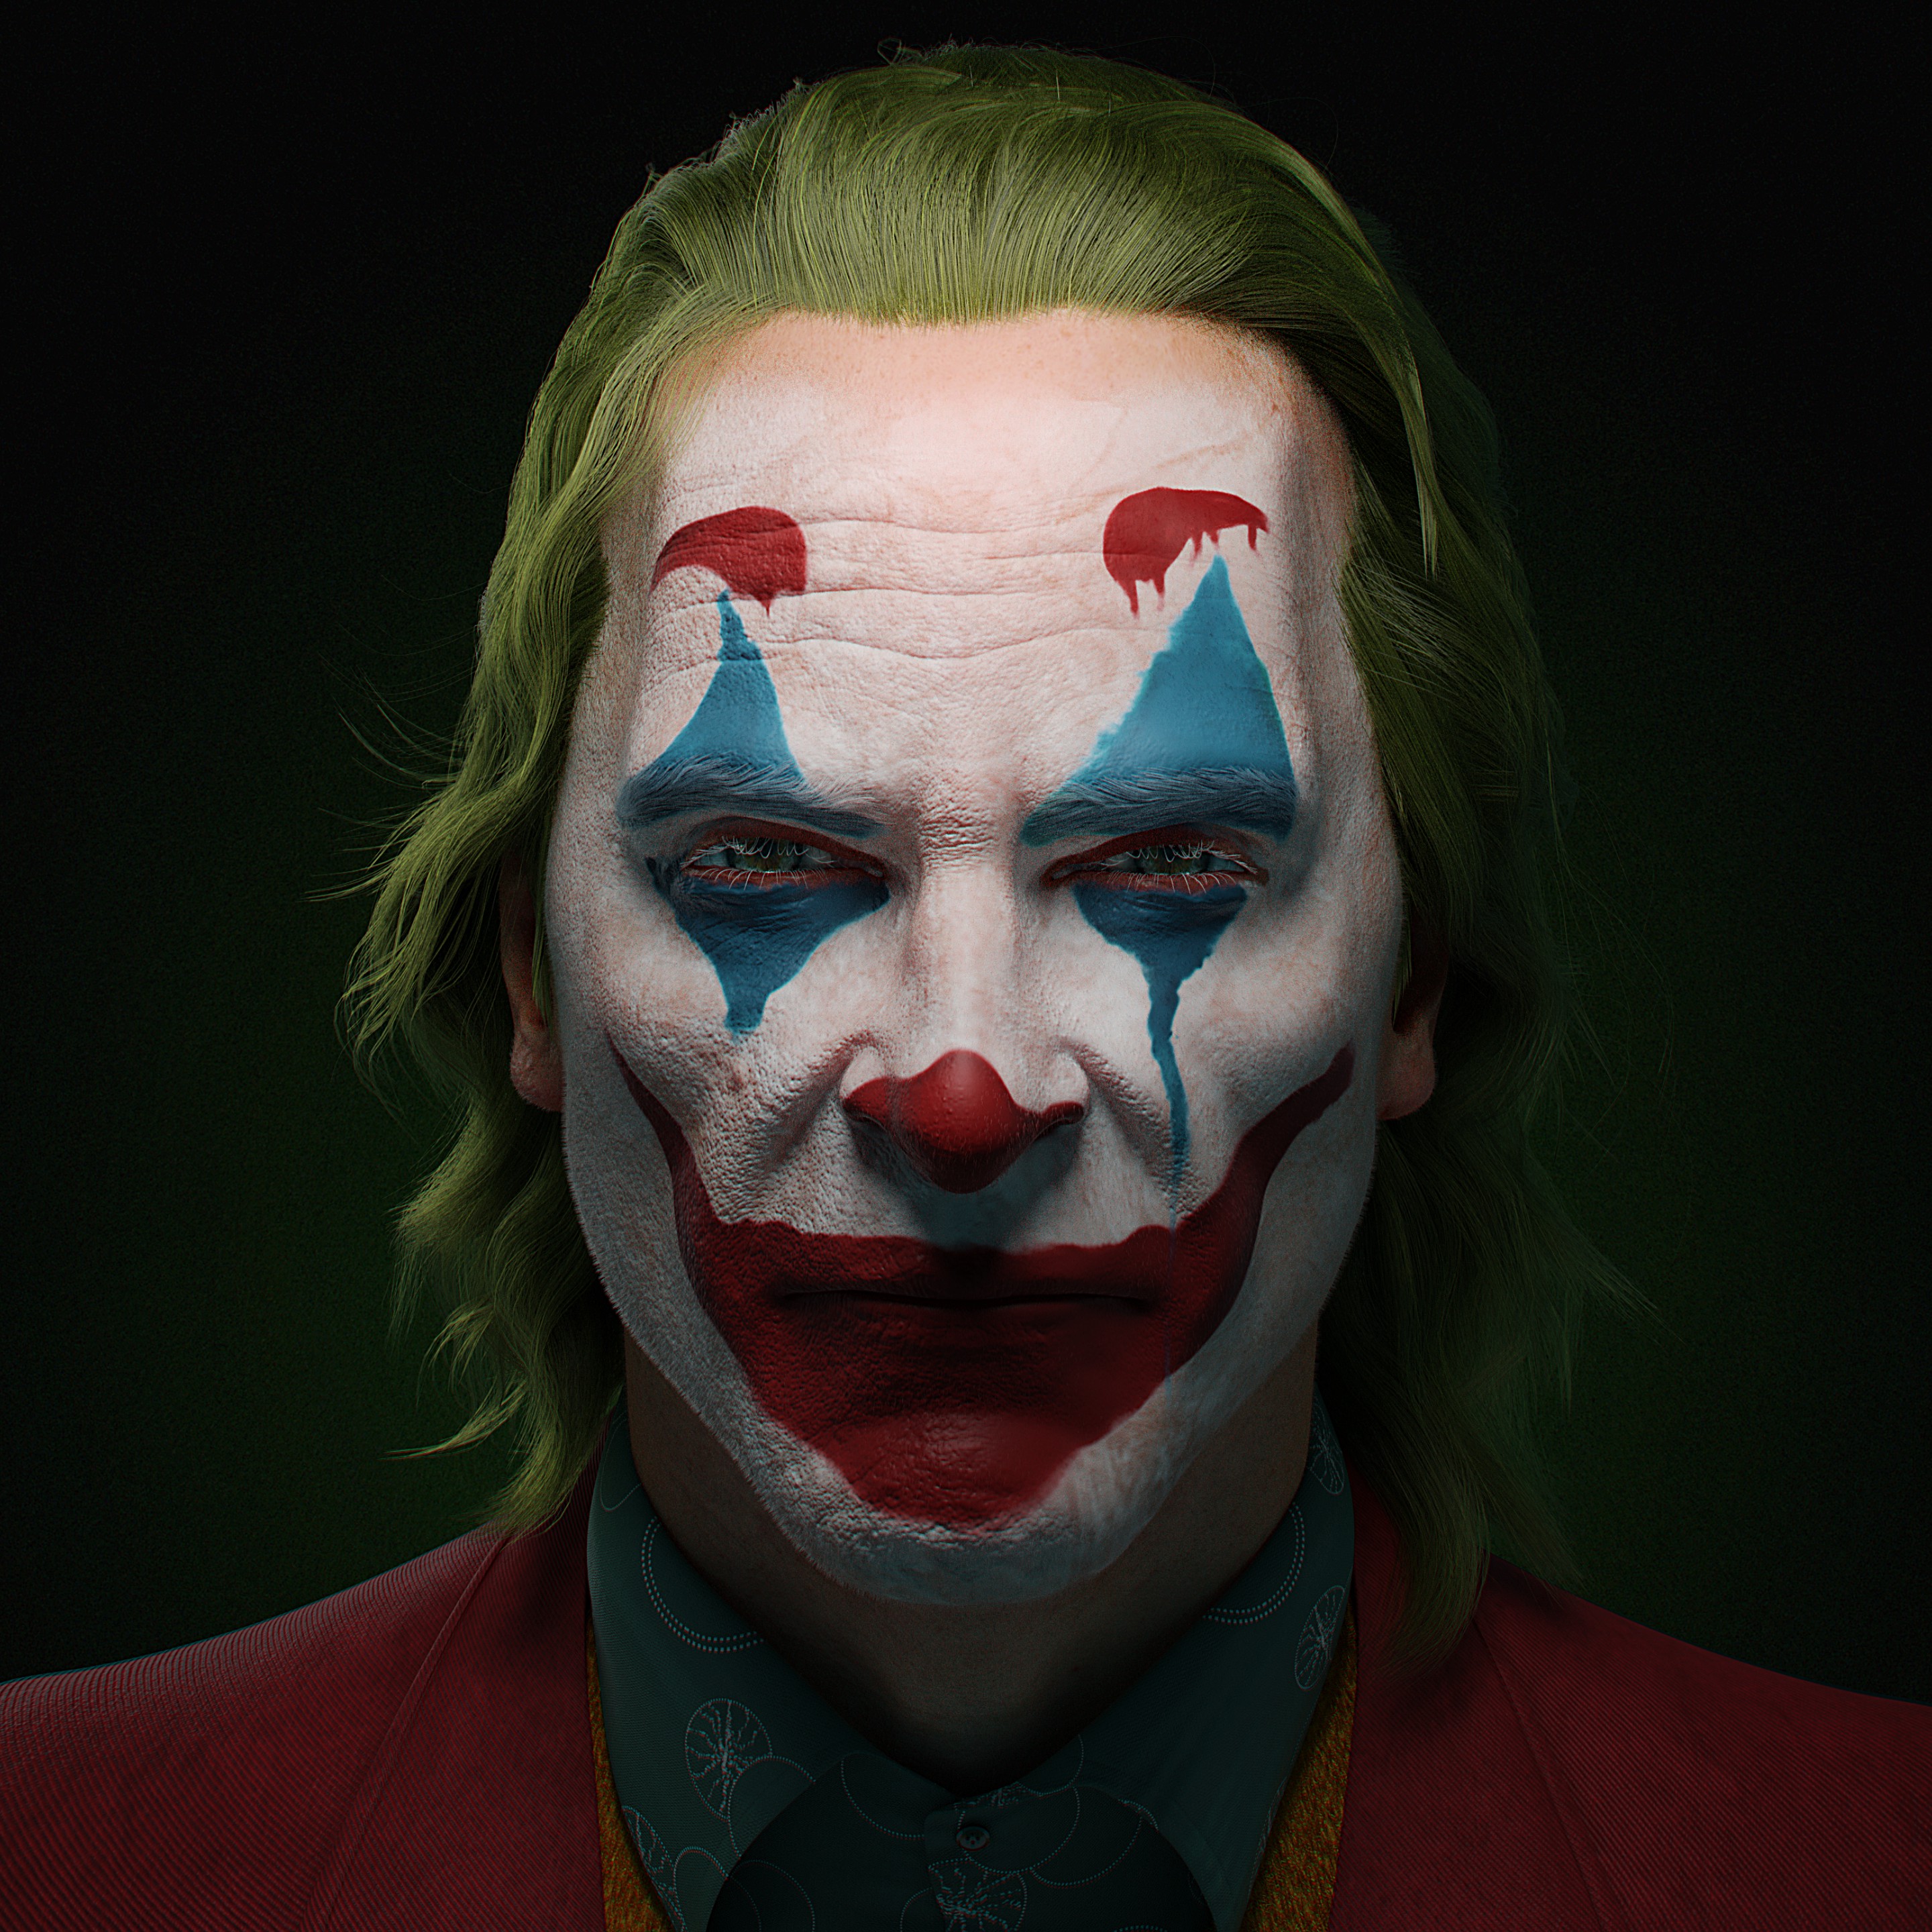 Joker - Joaquin Phoenix - Finished Projects - Blender Artists Community